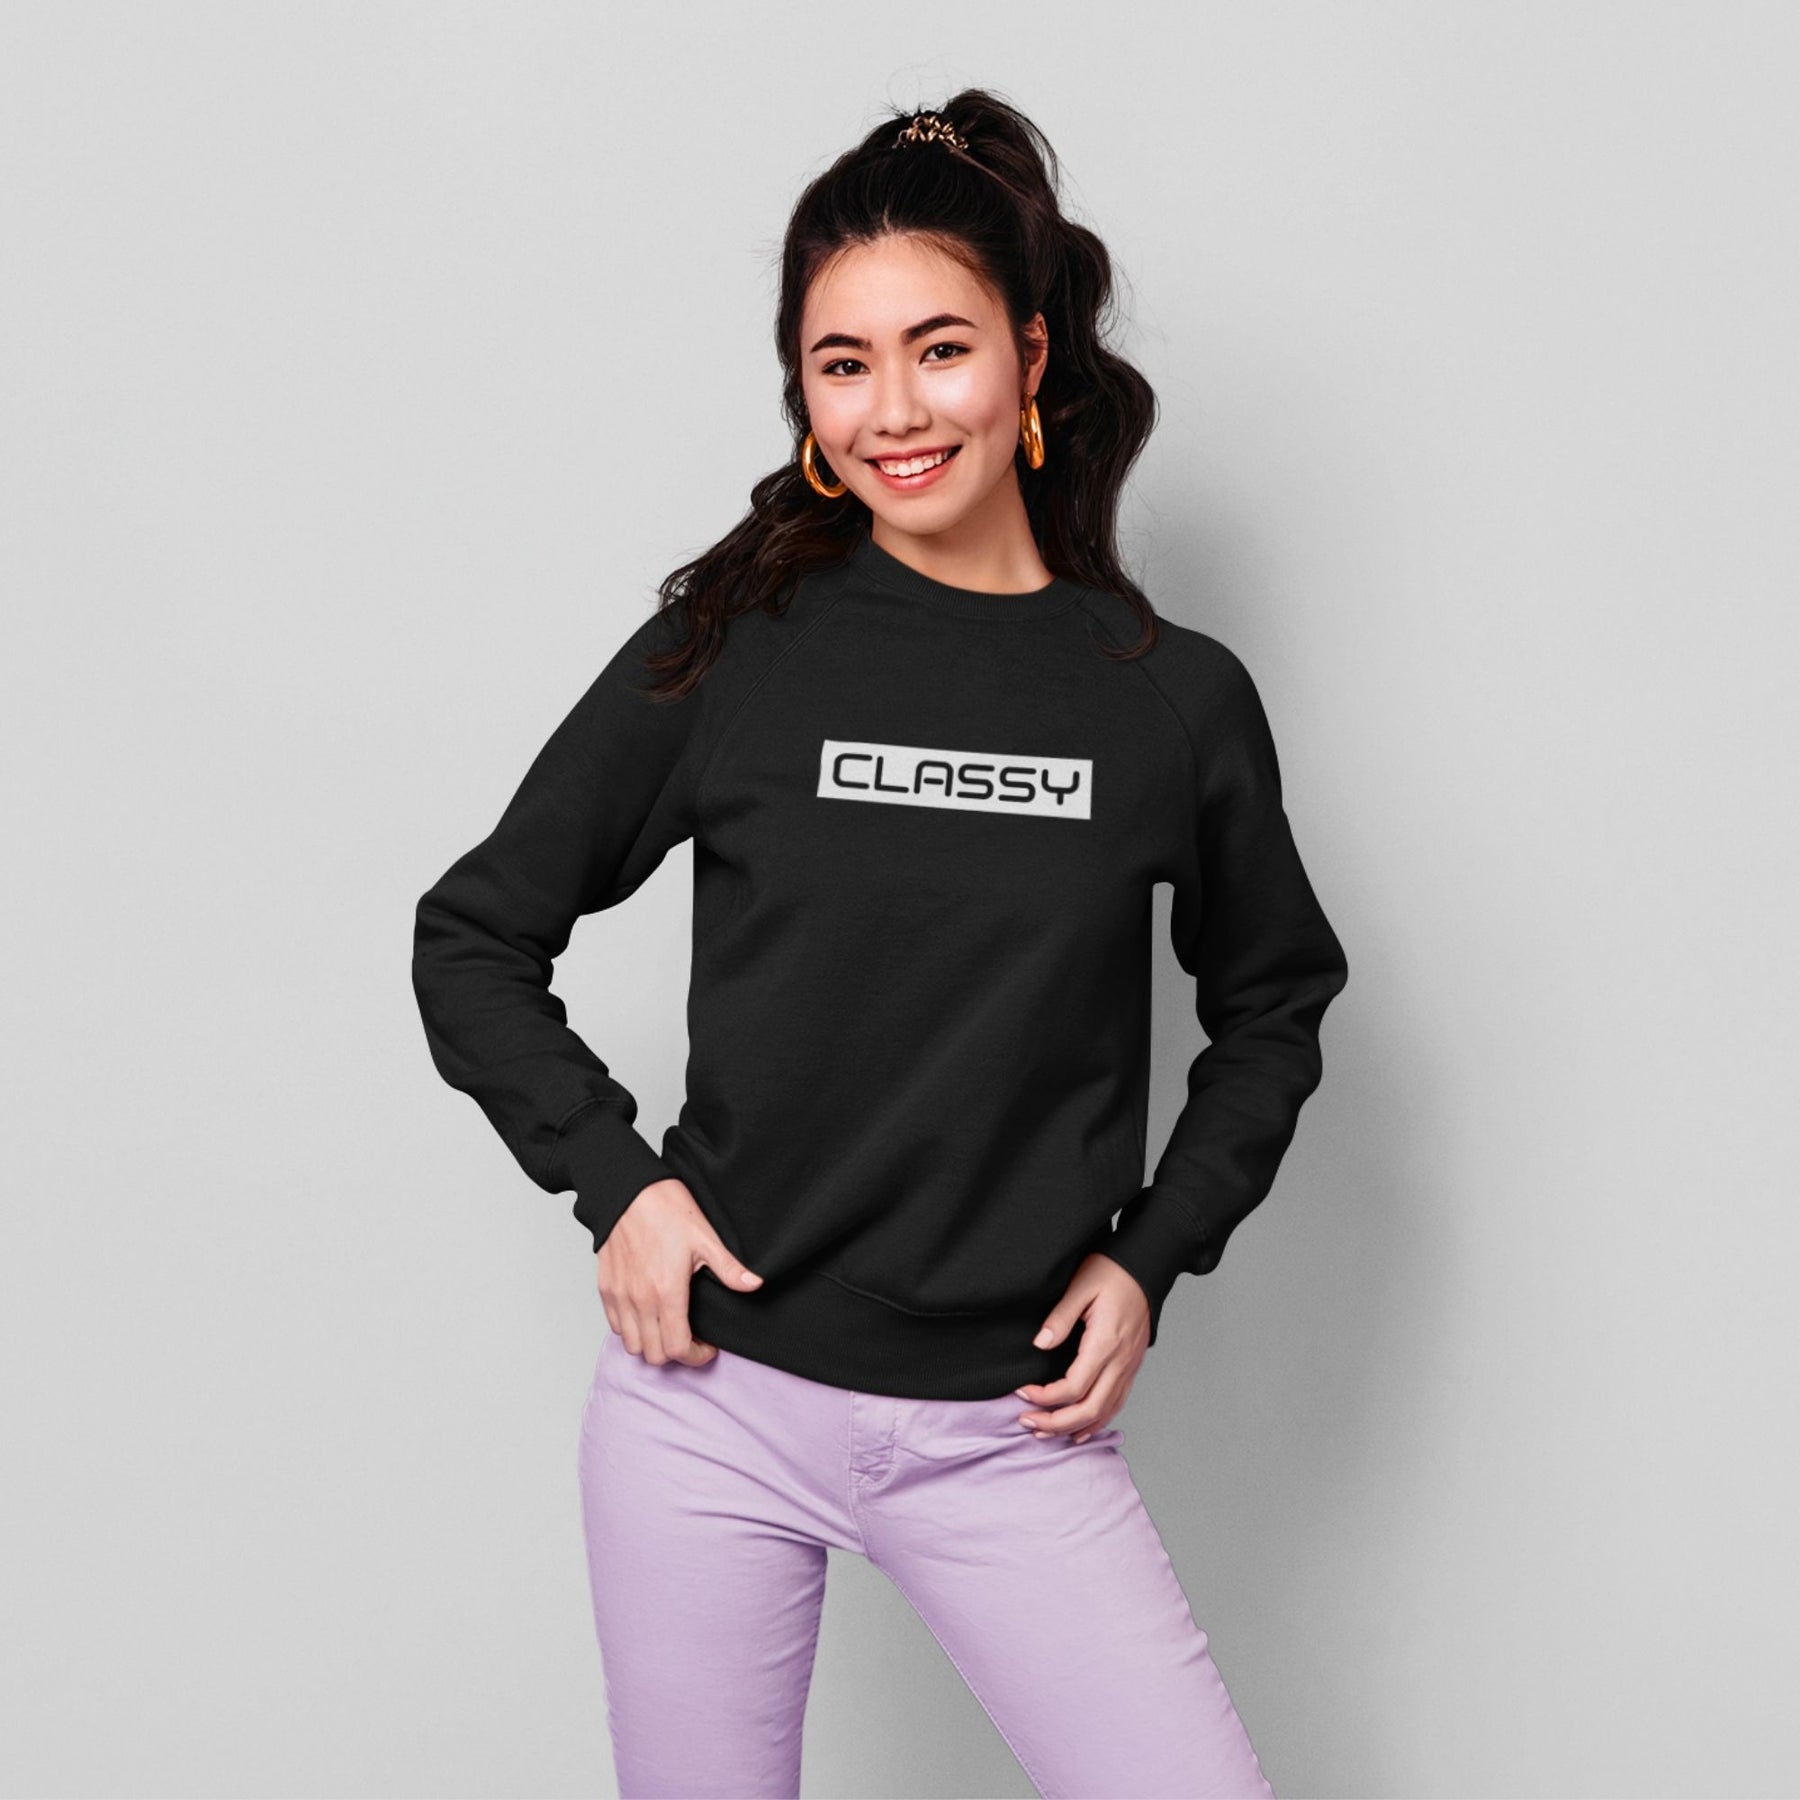 classy-cotton-printed-unisex-black-female-model-sweatshirt-gogirgit-com